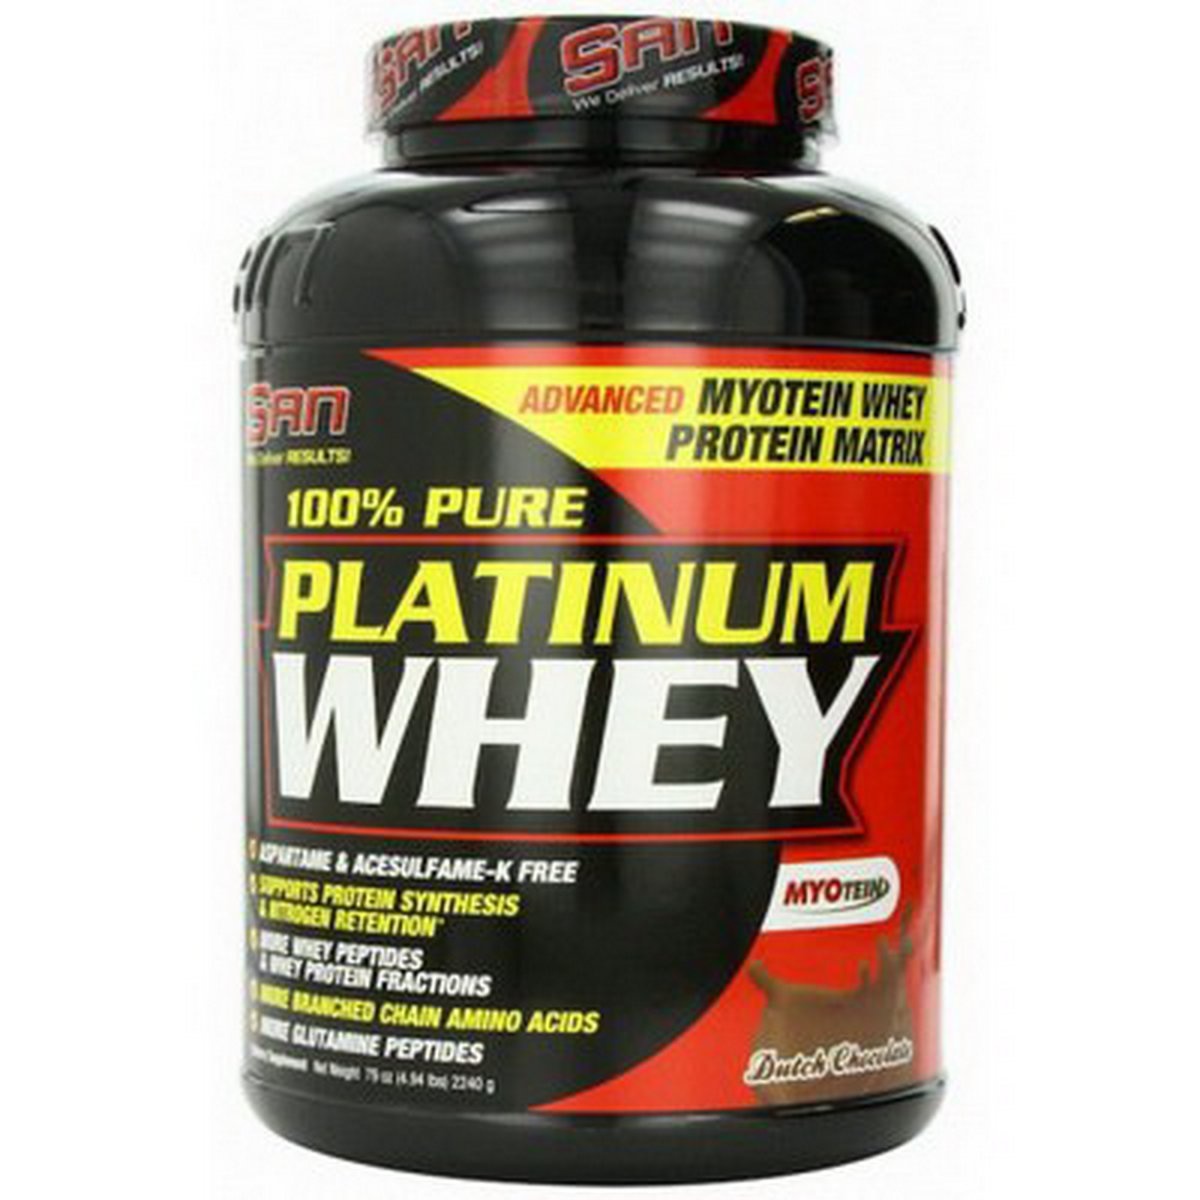 Купить протеин в минске. Протеин s.a.n. 100% Pure Platinum Whey. Платинум Вей протеин сывороточный. Протеин Platinum Whey San. Пур Вей протеин 100%.